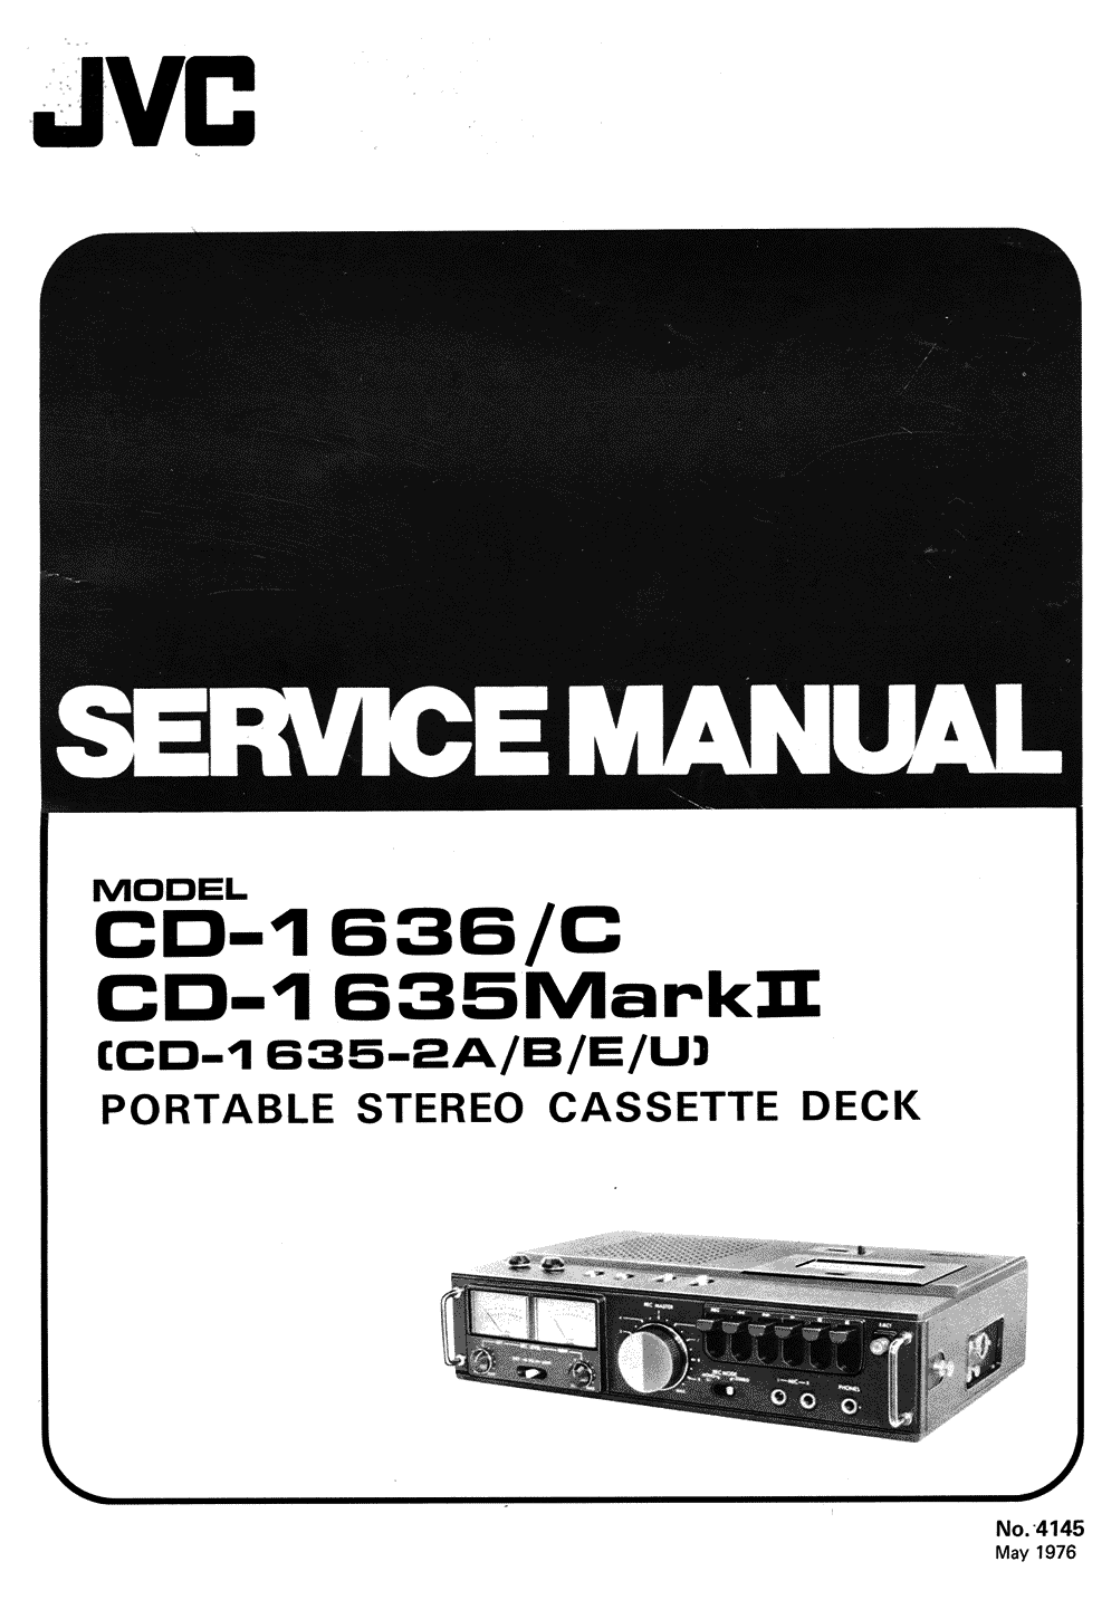 JVC CD-1636 Service manual